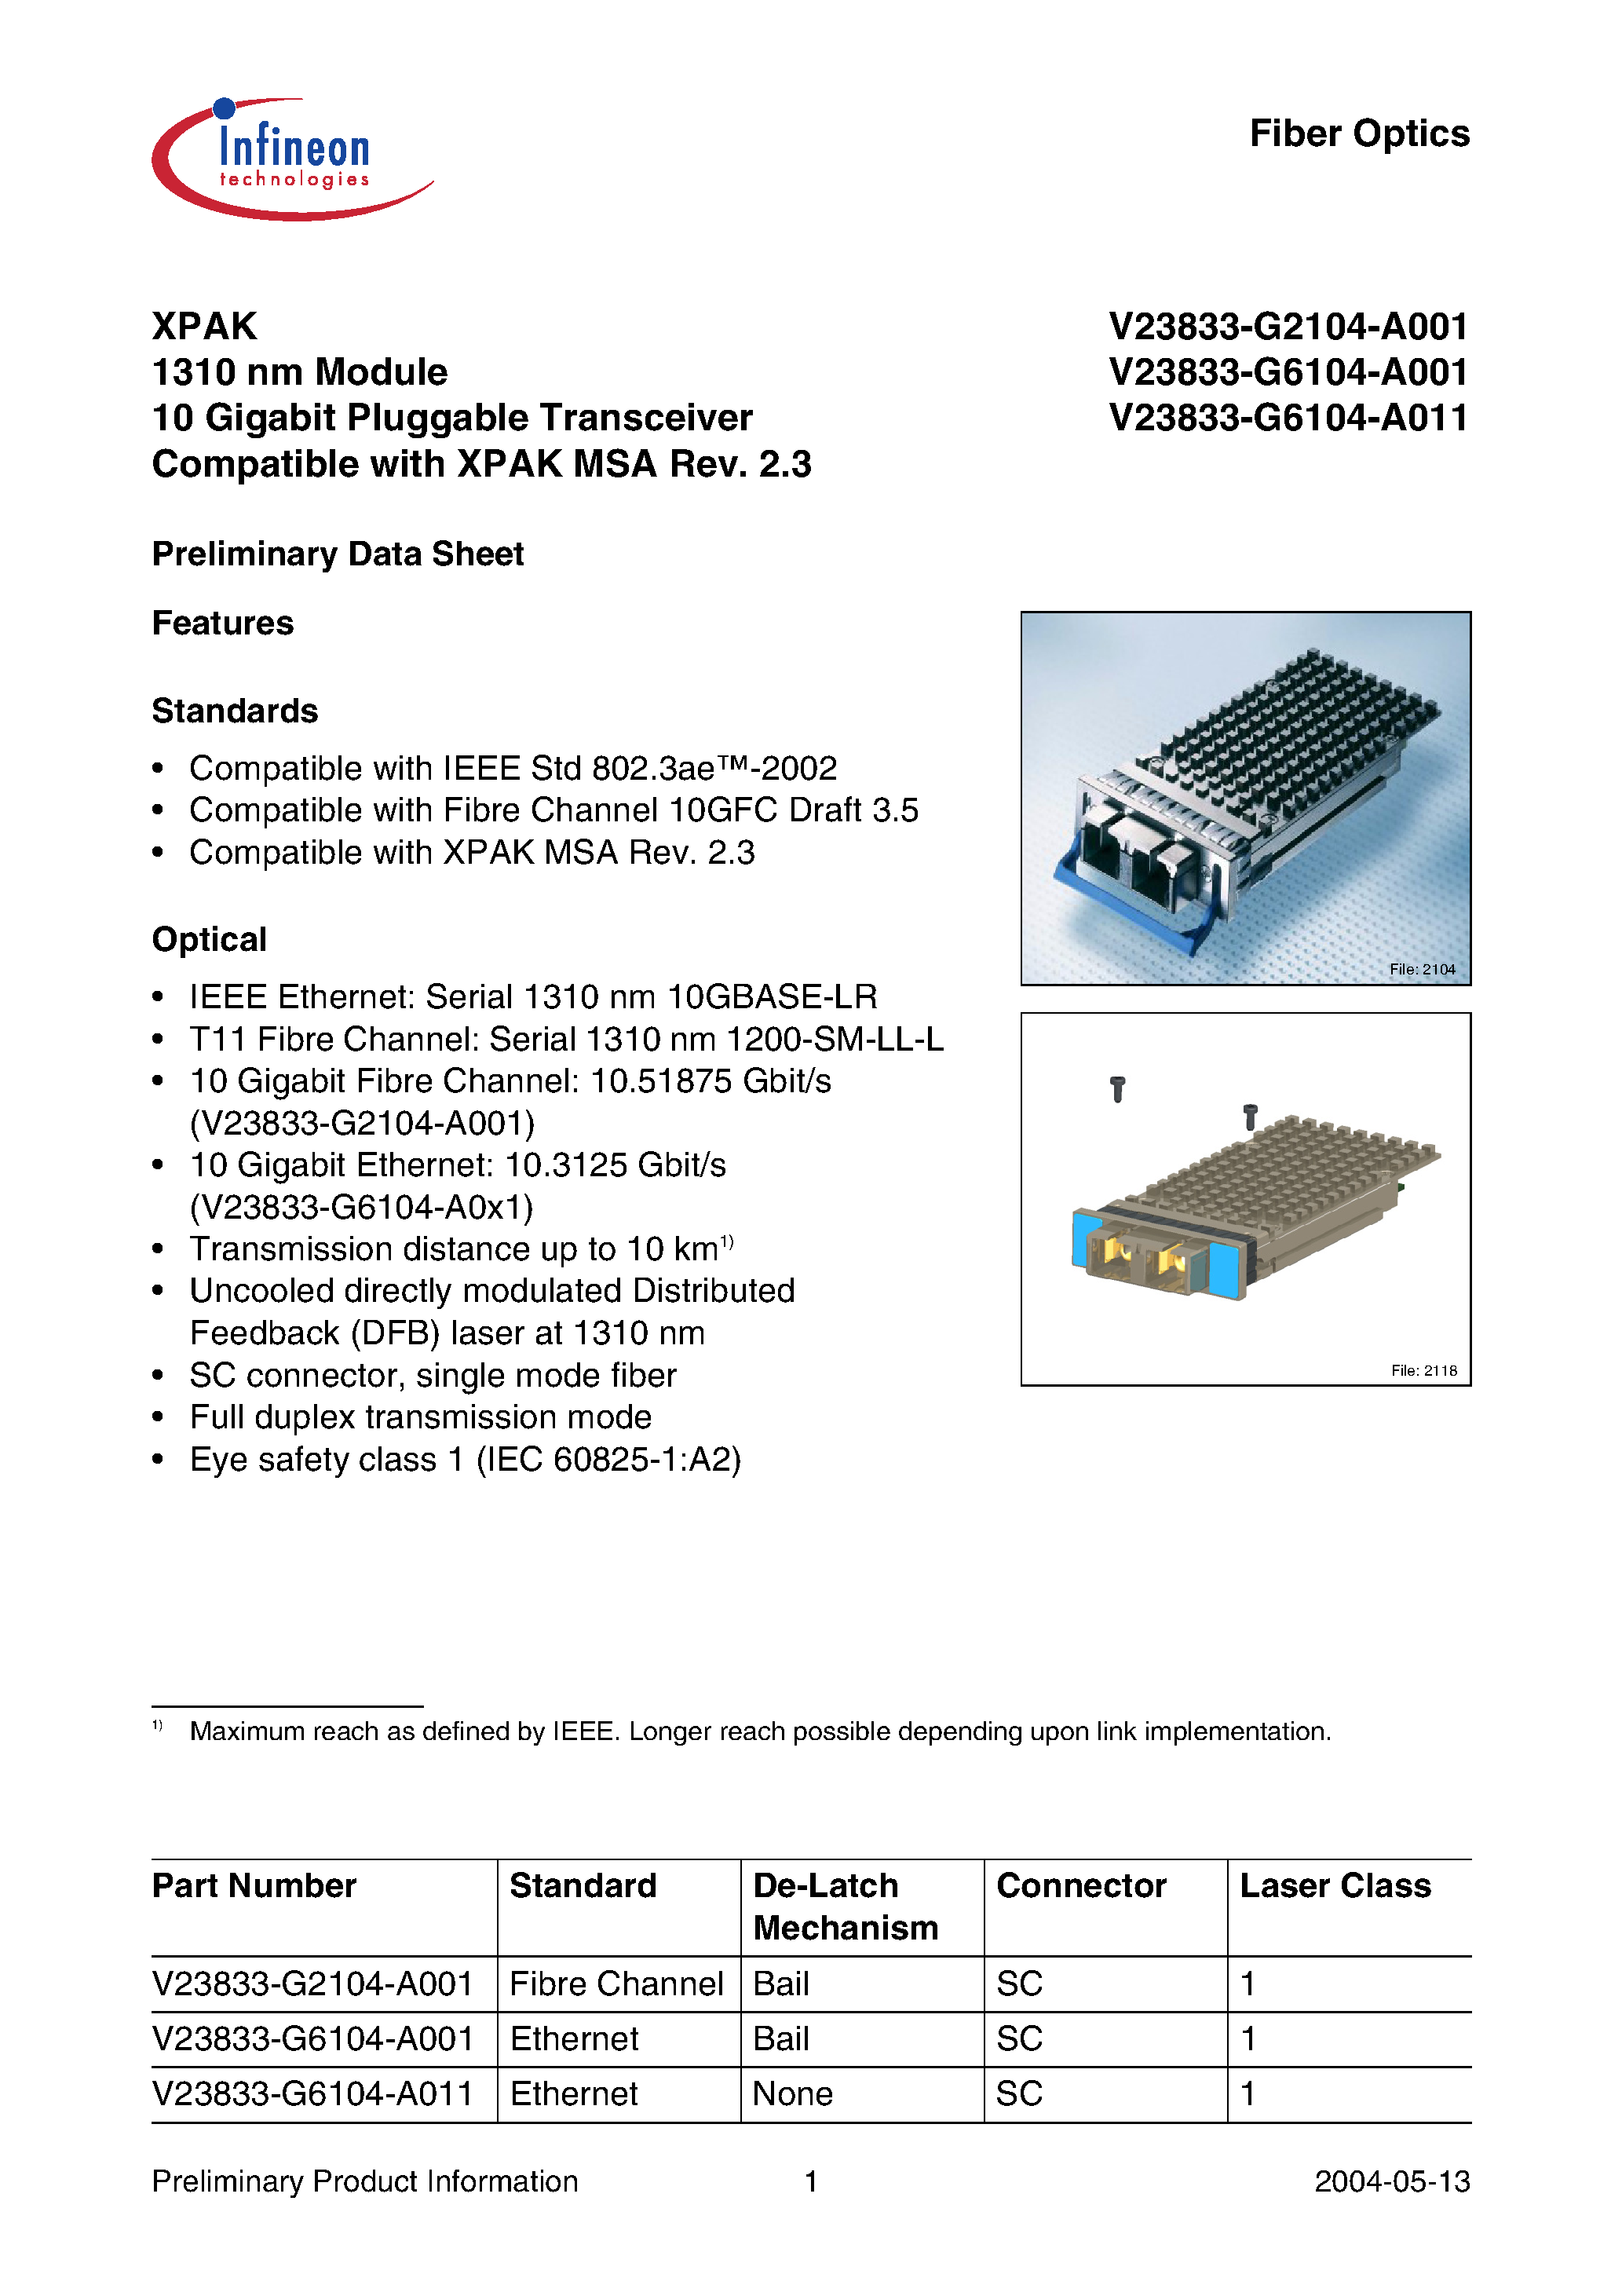 Datasheet V23833-G6104-A001 - XPAK 1310 nm Module 10 Gigabit Pluggable Transceiver Compatible with XPAK MSA Rev. 2.3 page 1